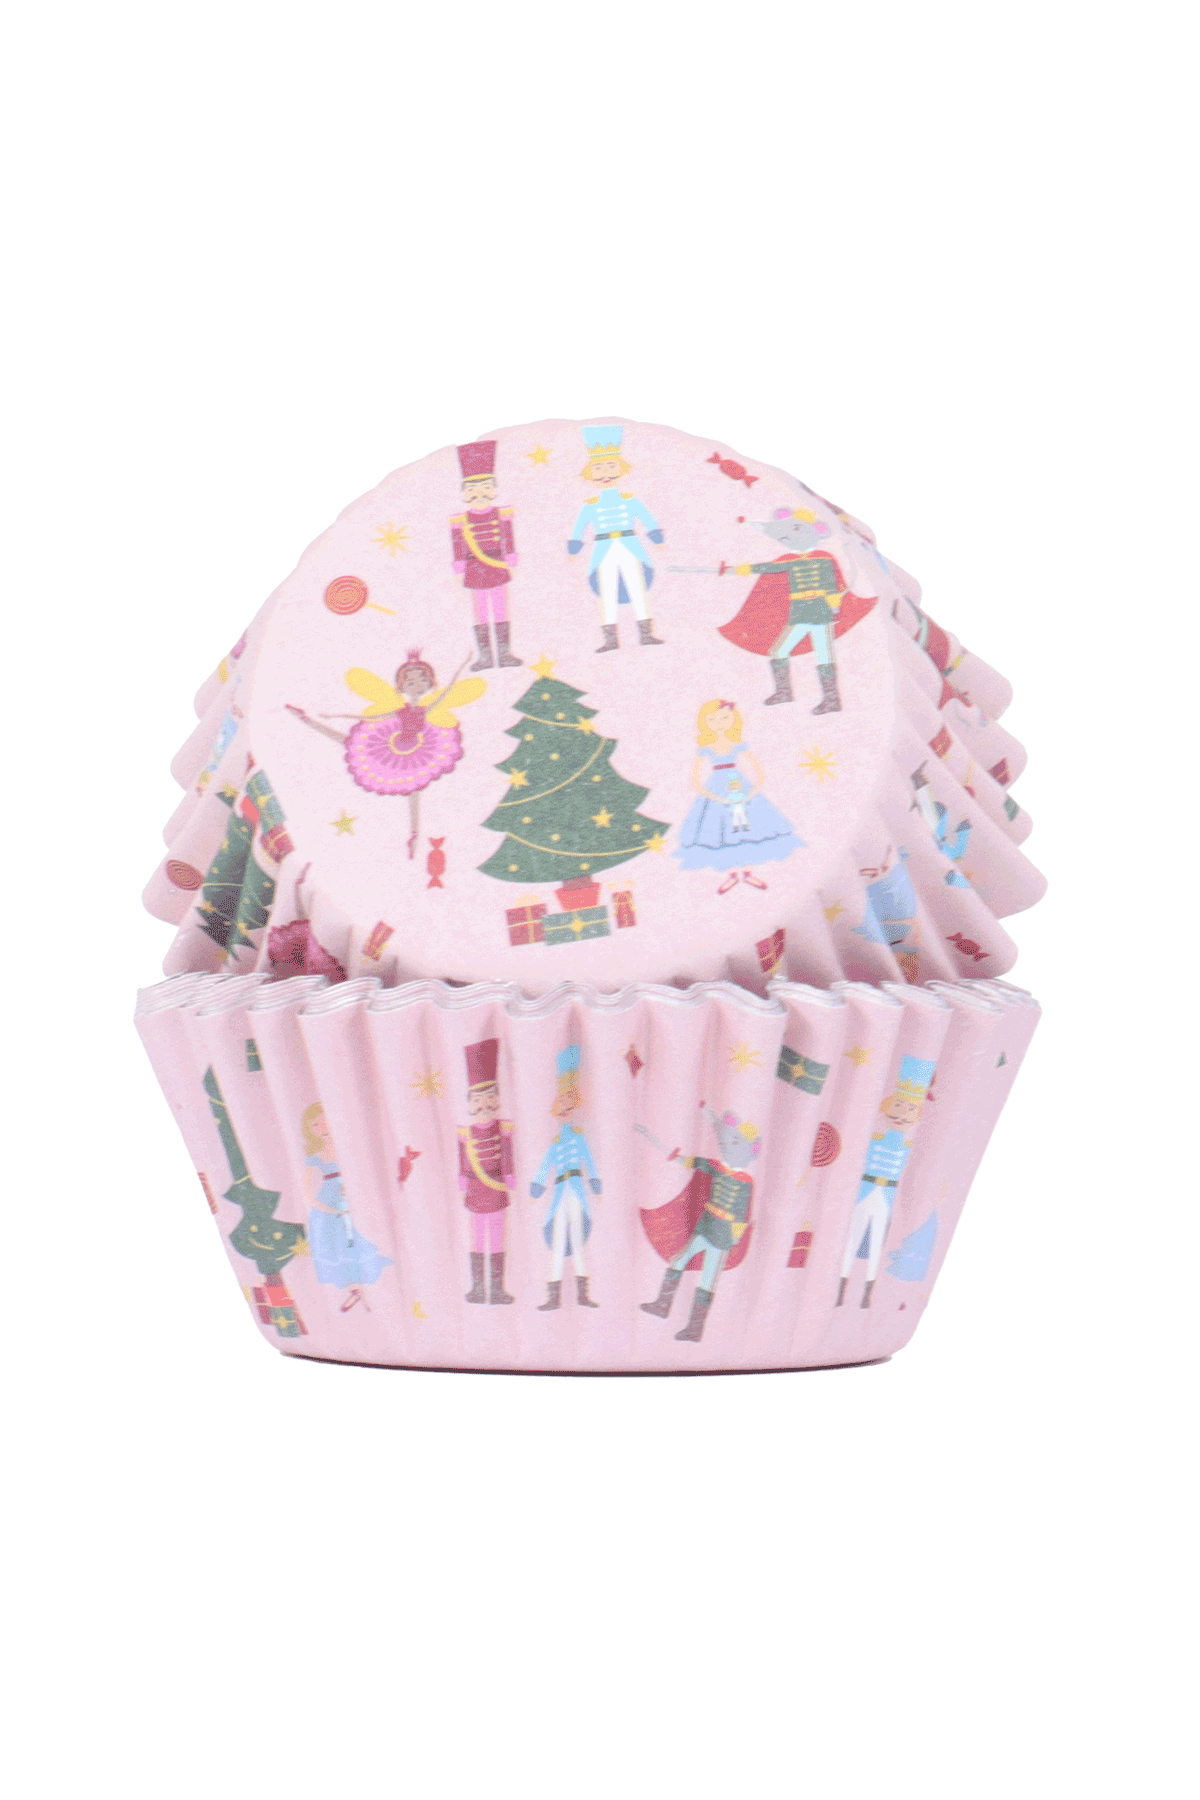 Cupcake Cases - Christmas Nutcracker - 30 Pack Cupcake Cases PME